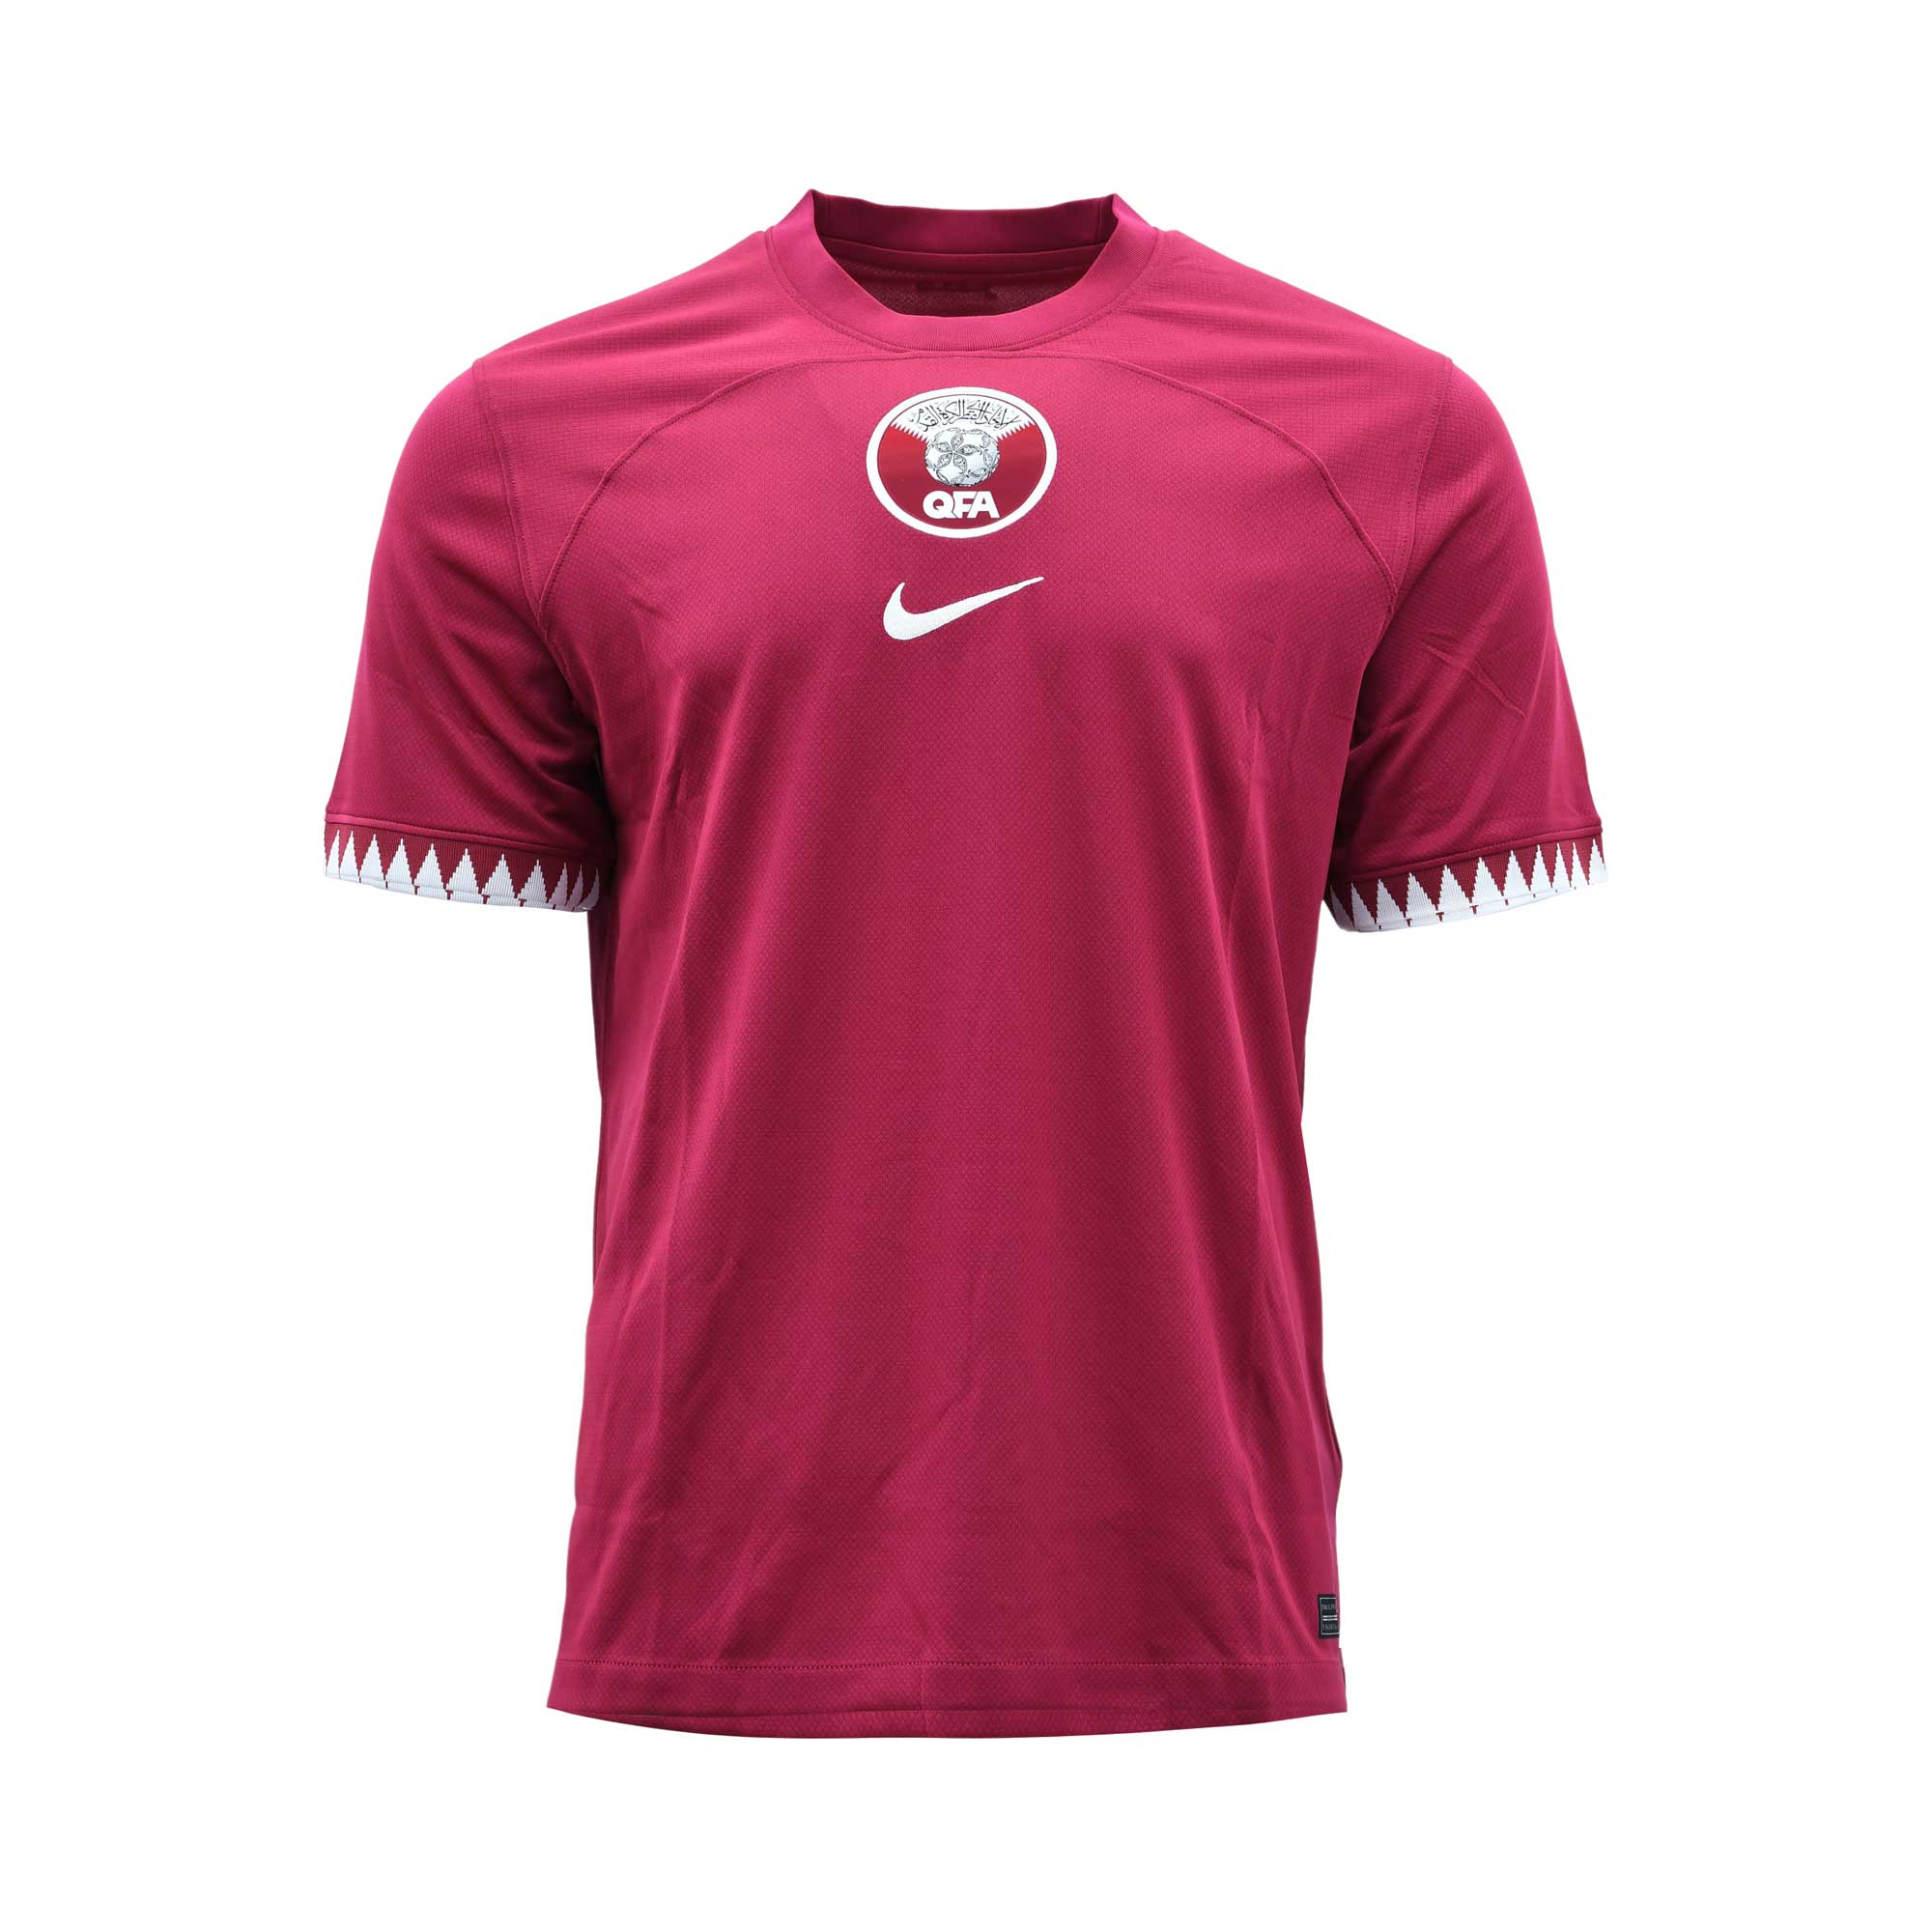 QFA Nike Men's Home Qatar Jersey